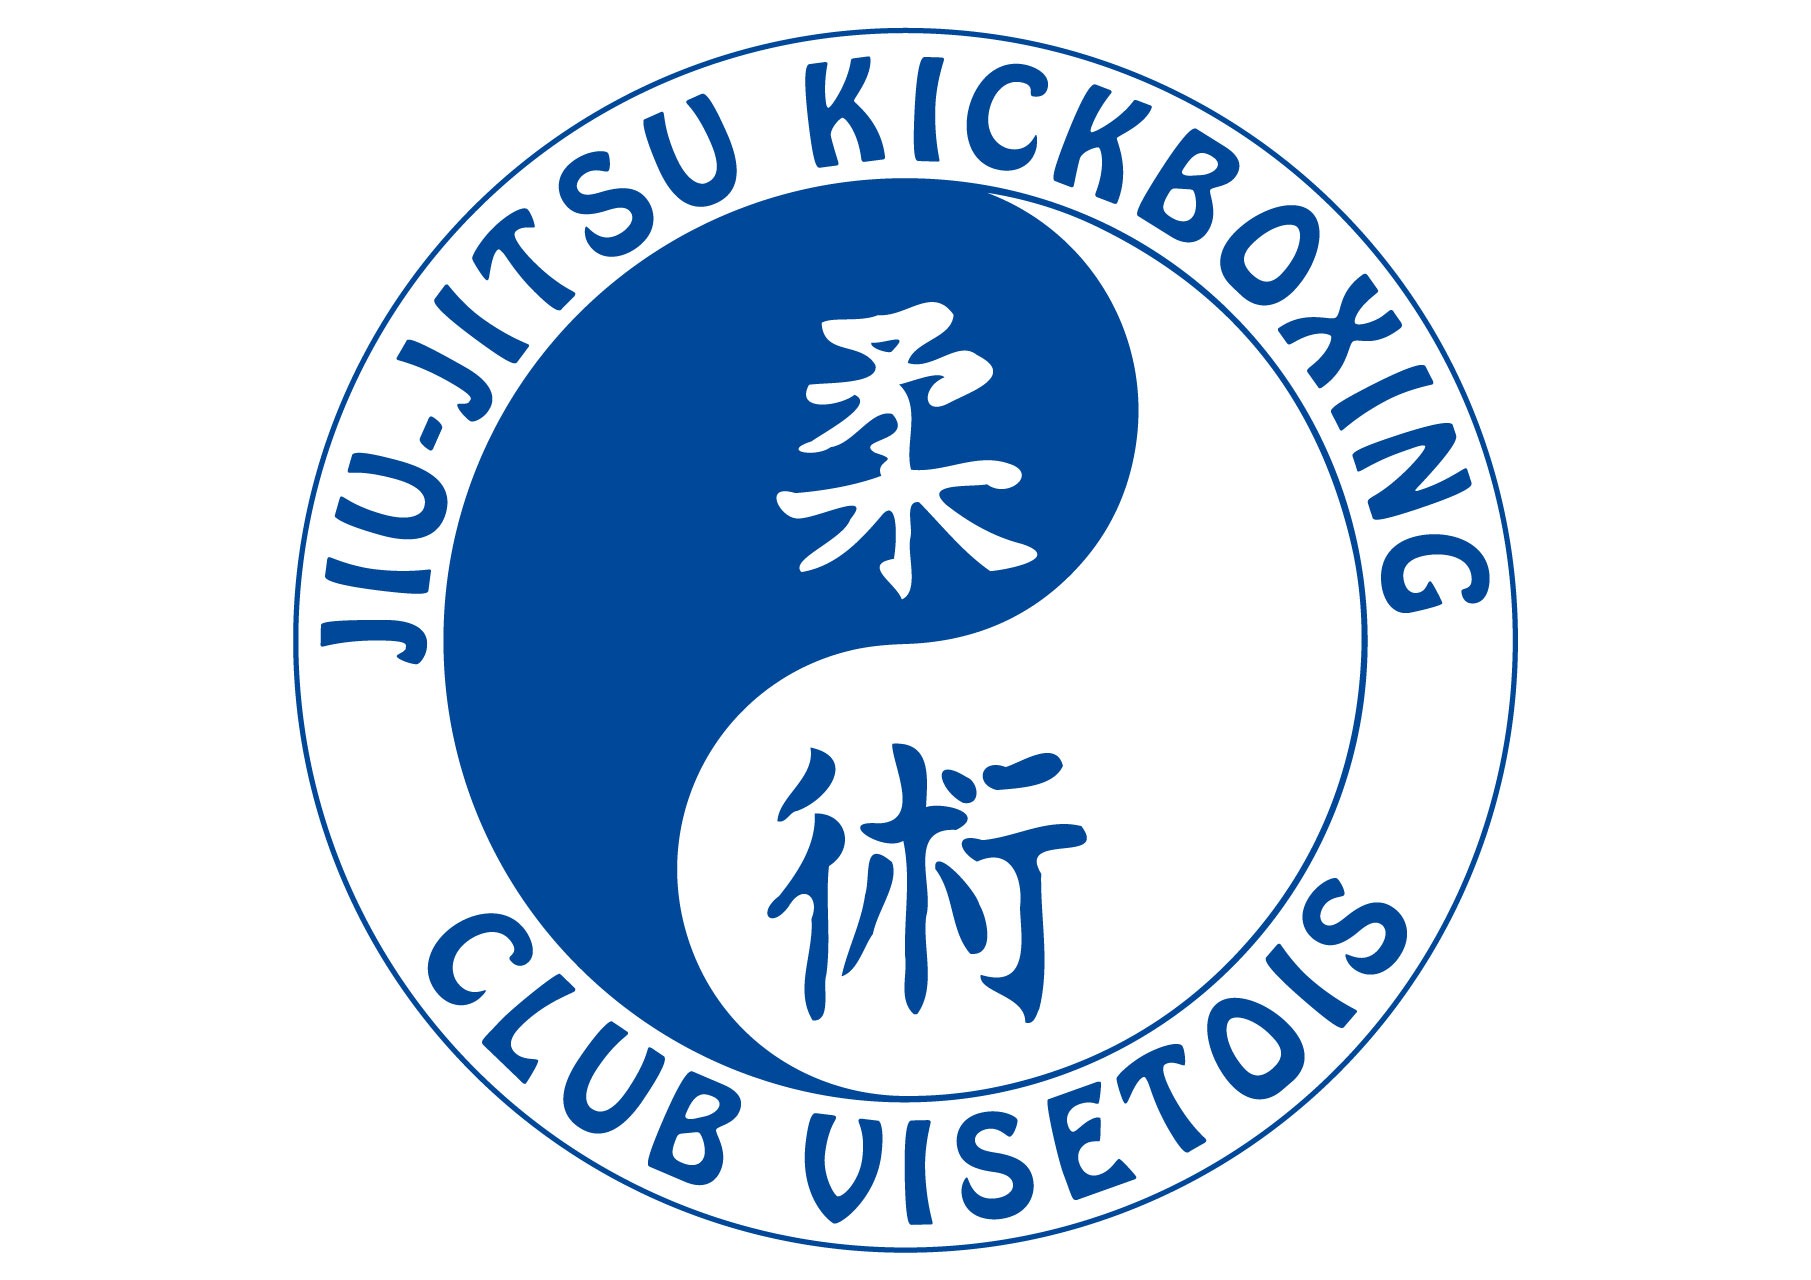 Jiu Jitsu Kick Boxing Club Visétois ASBL